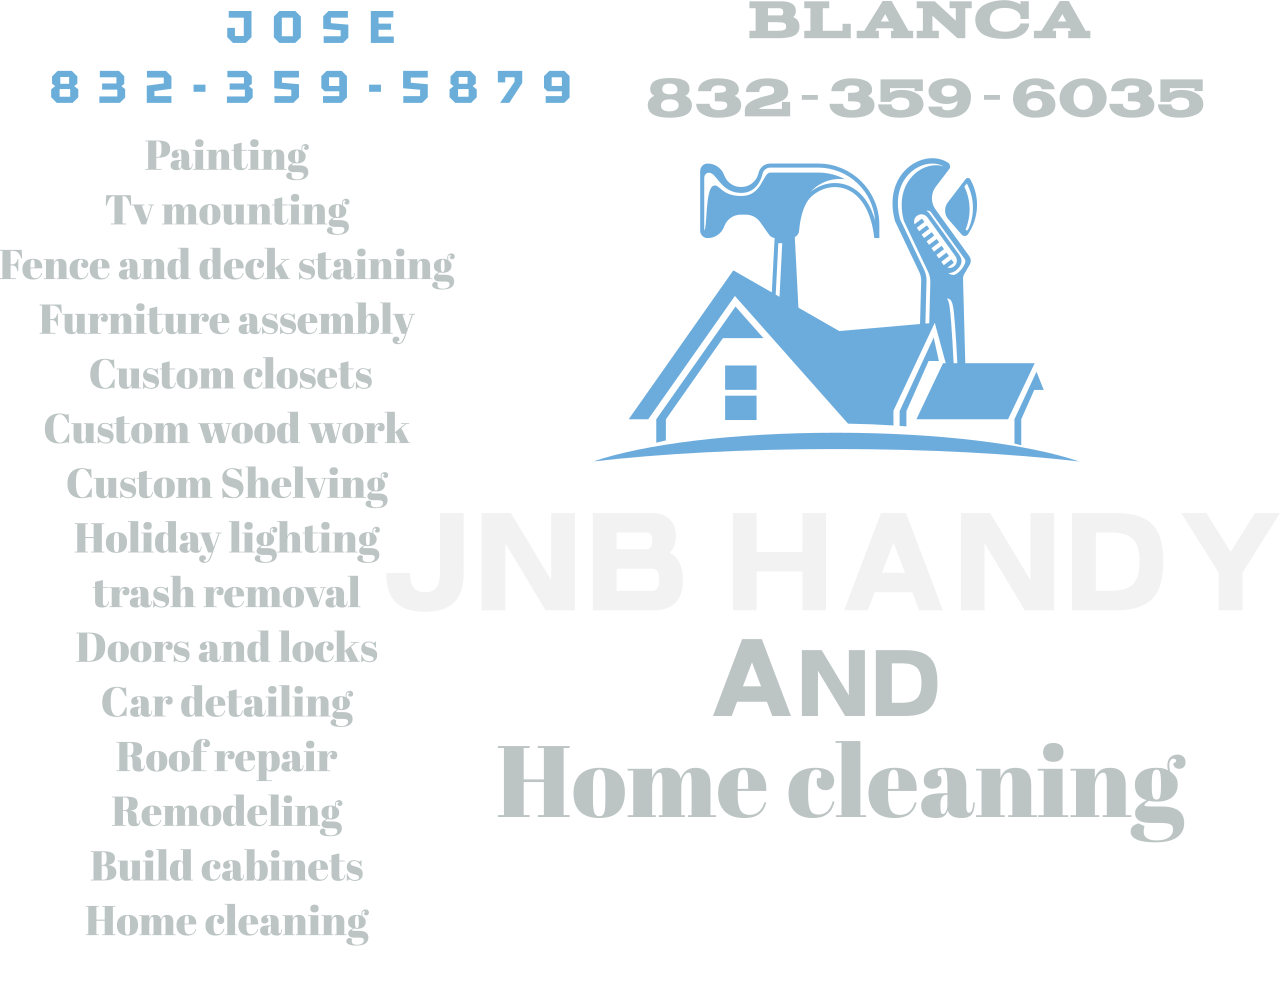 JnB Handy 's logo